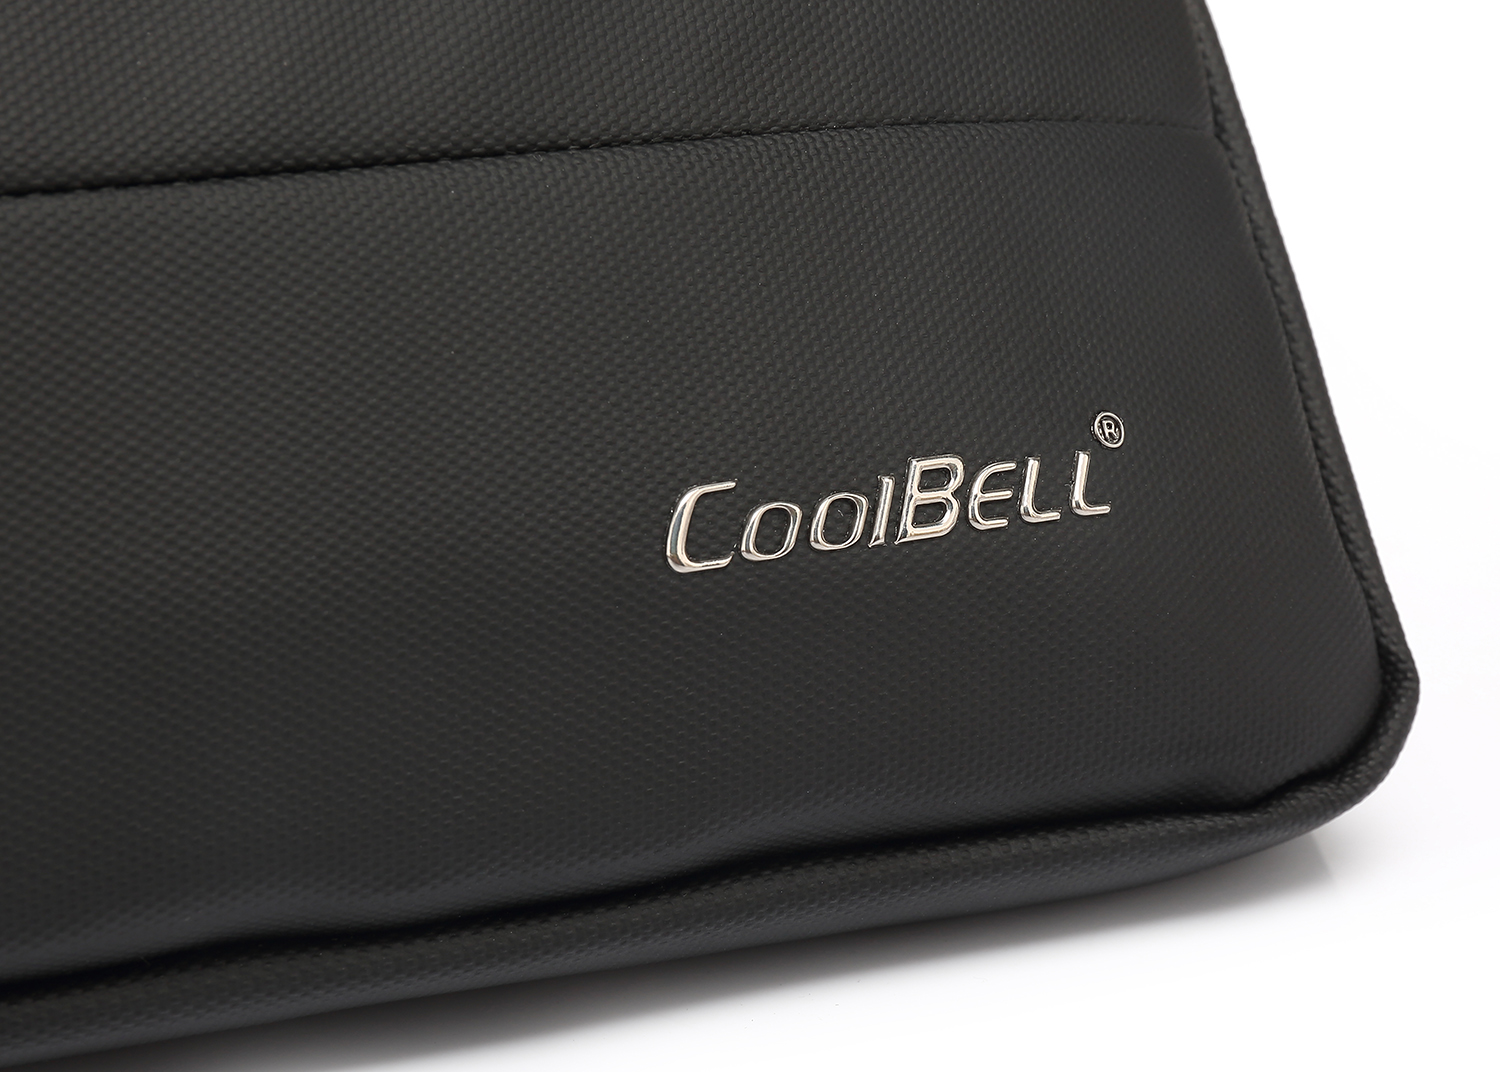 Coolbell CB-3103 Laptop Bag Price in Pakistan